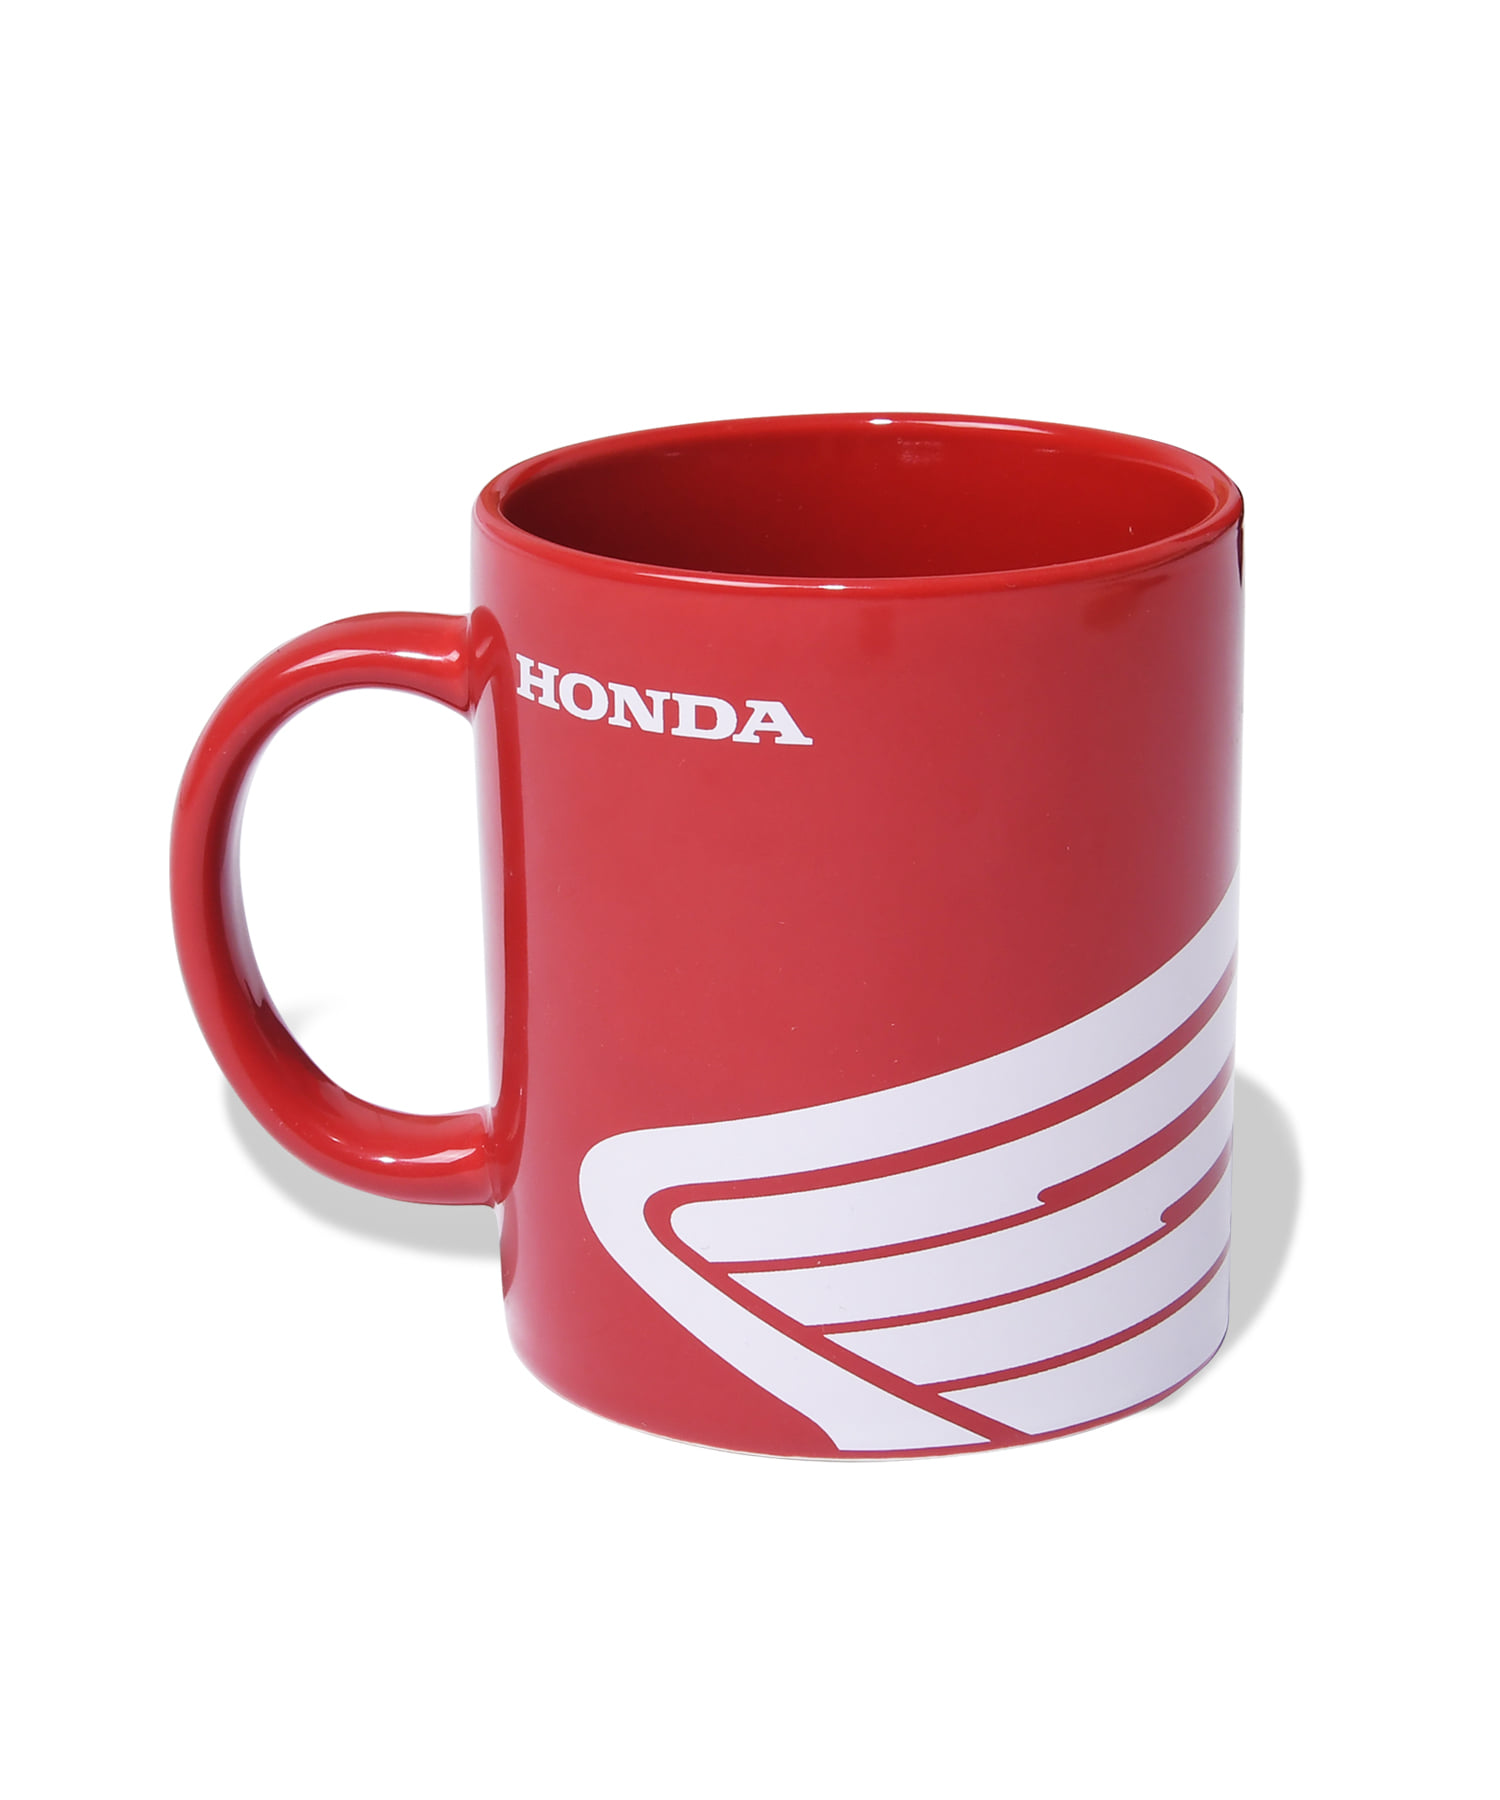 Honda Original Wing logo Mug Cup